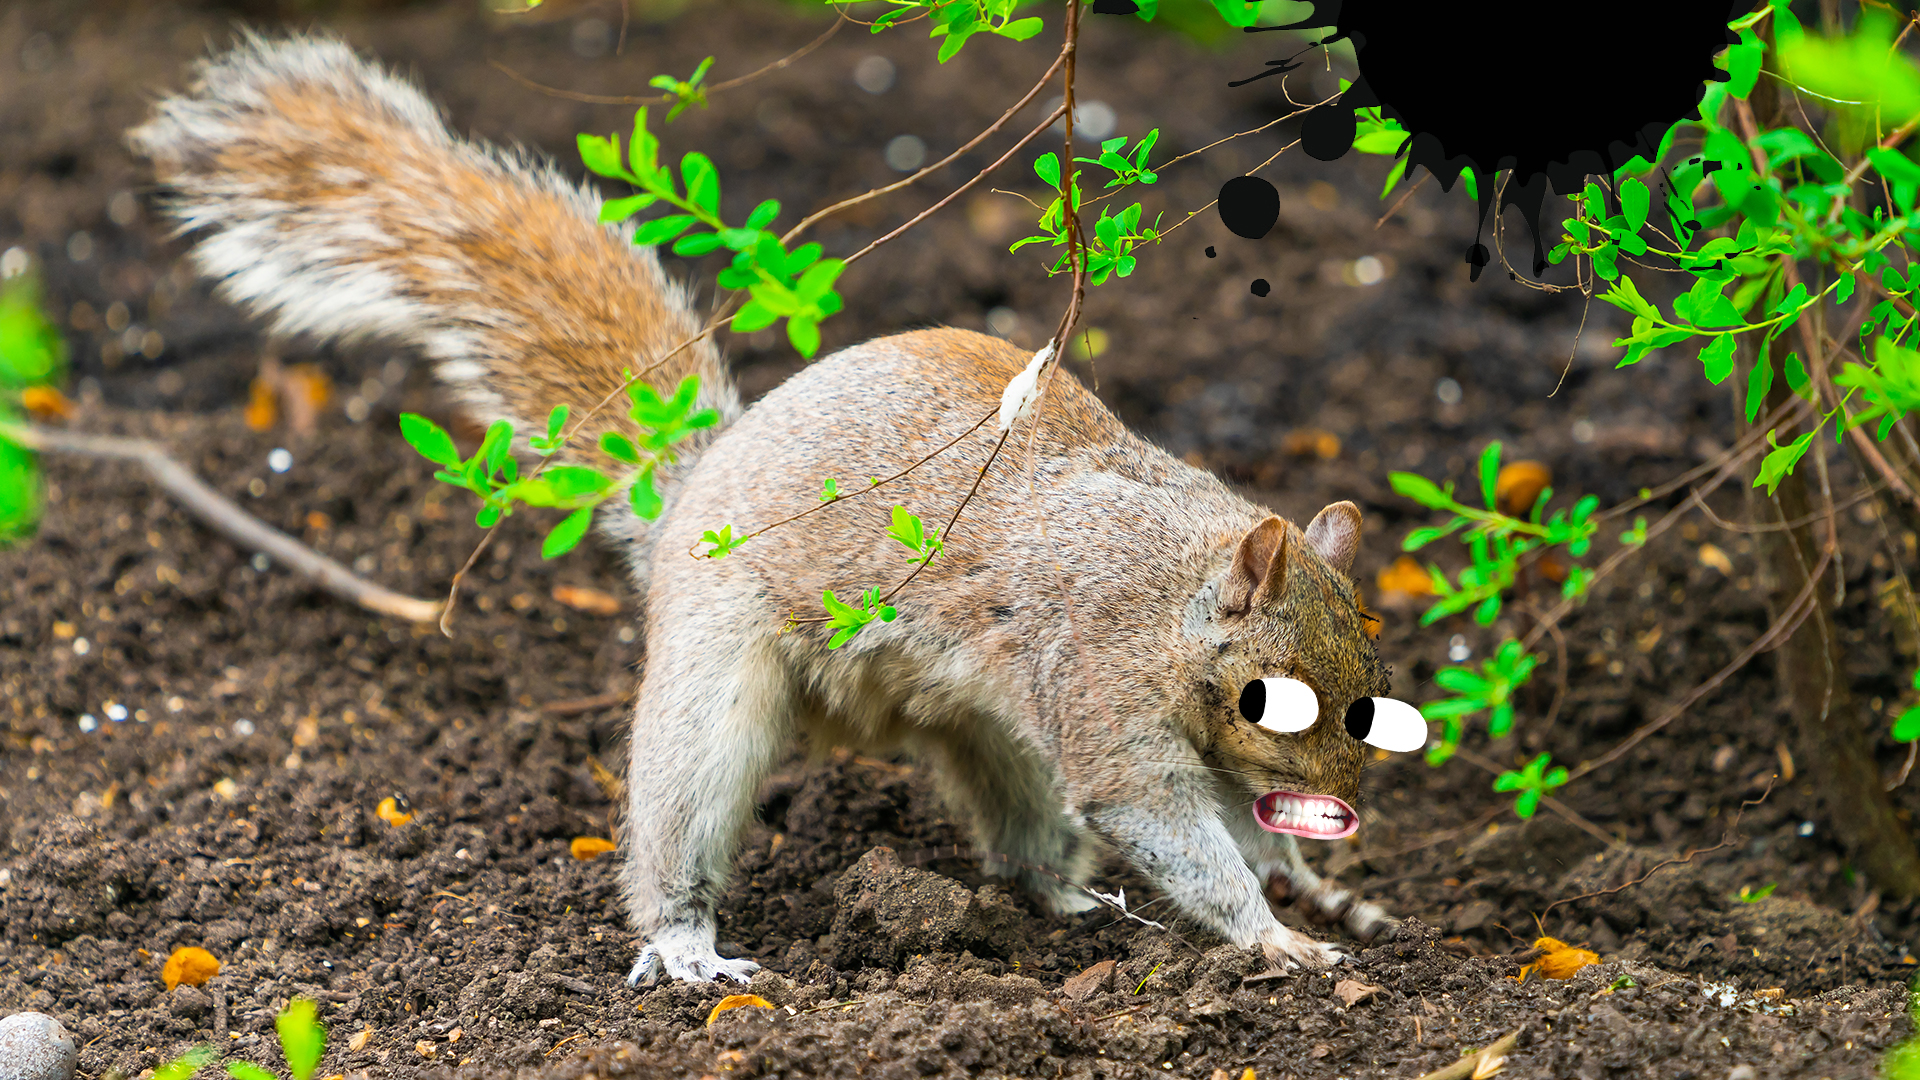 A squirrel burying something